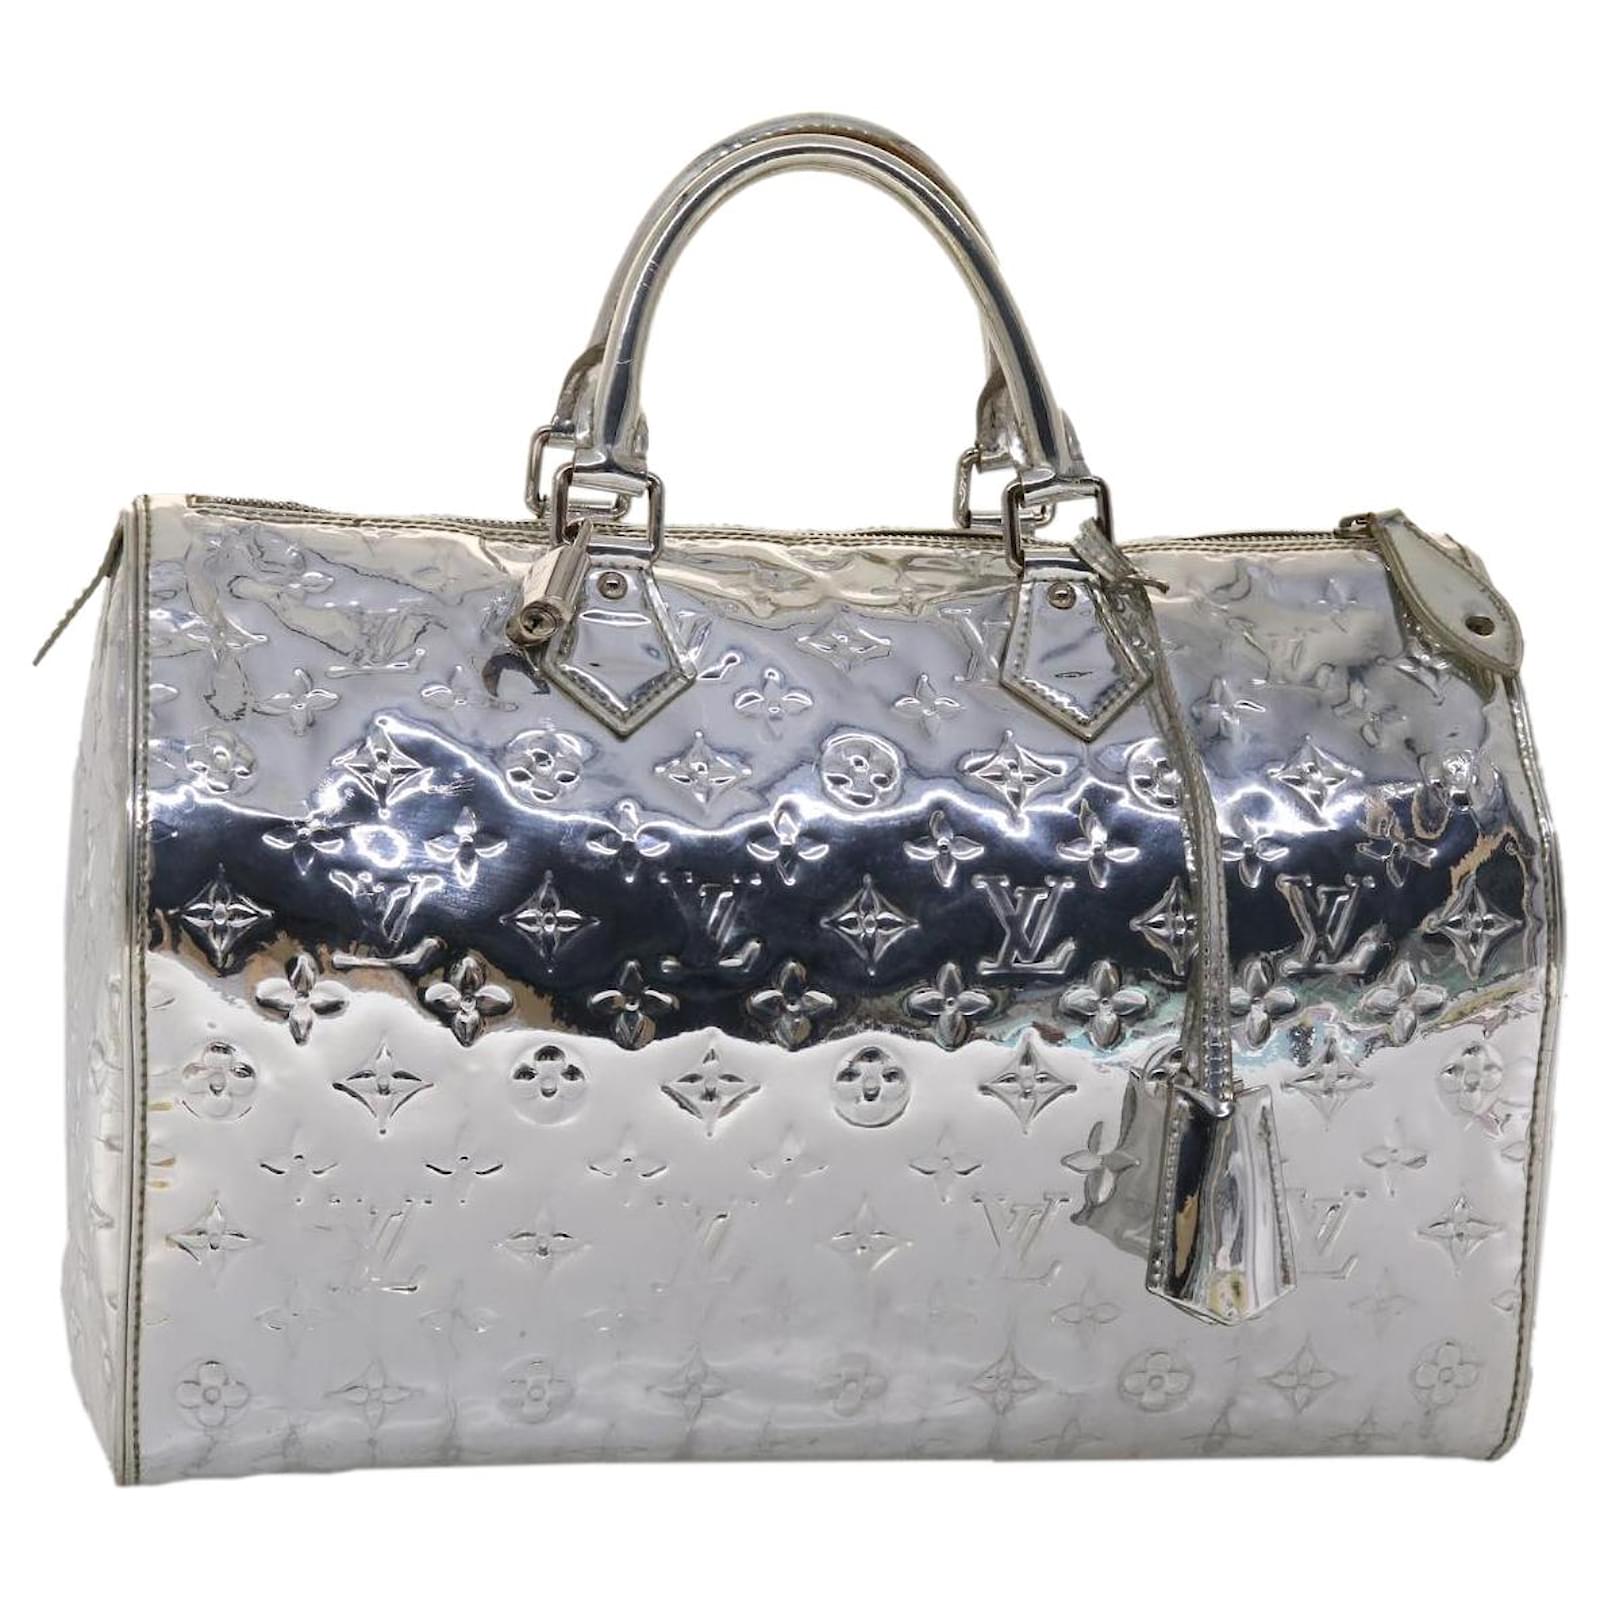 Louis Vuitton Speedy 35 Bag